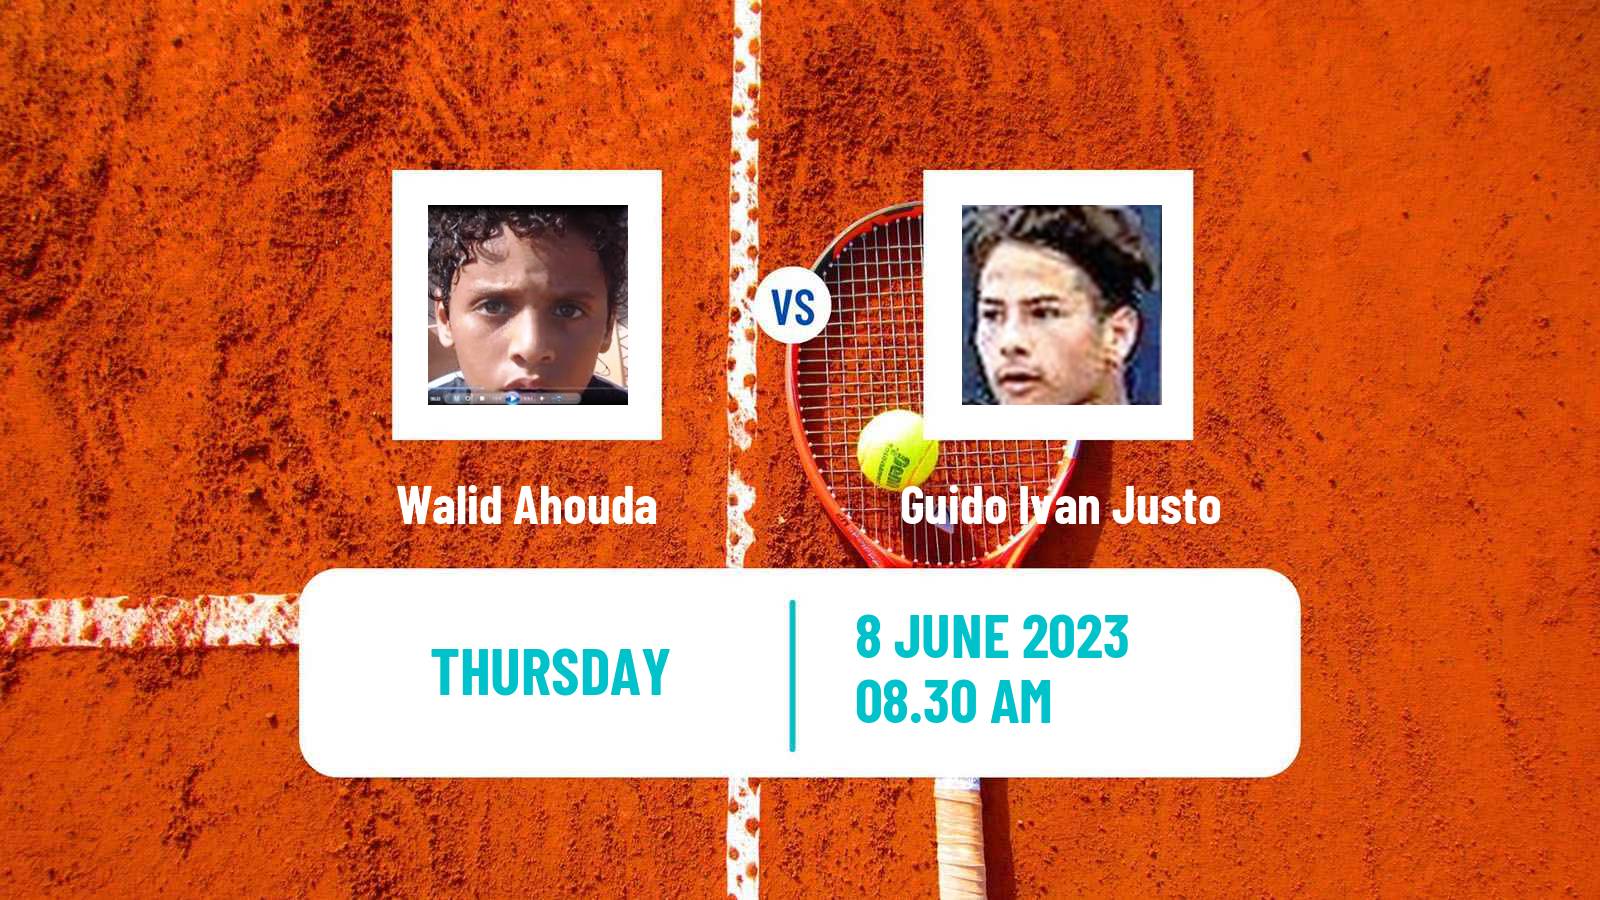 Tennis ITF M15 Tanger Men Walid Ahouda - Guido Ivan Justo